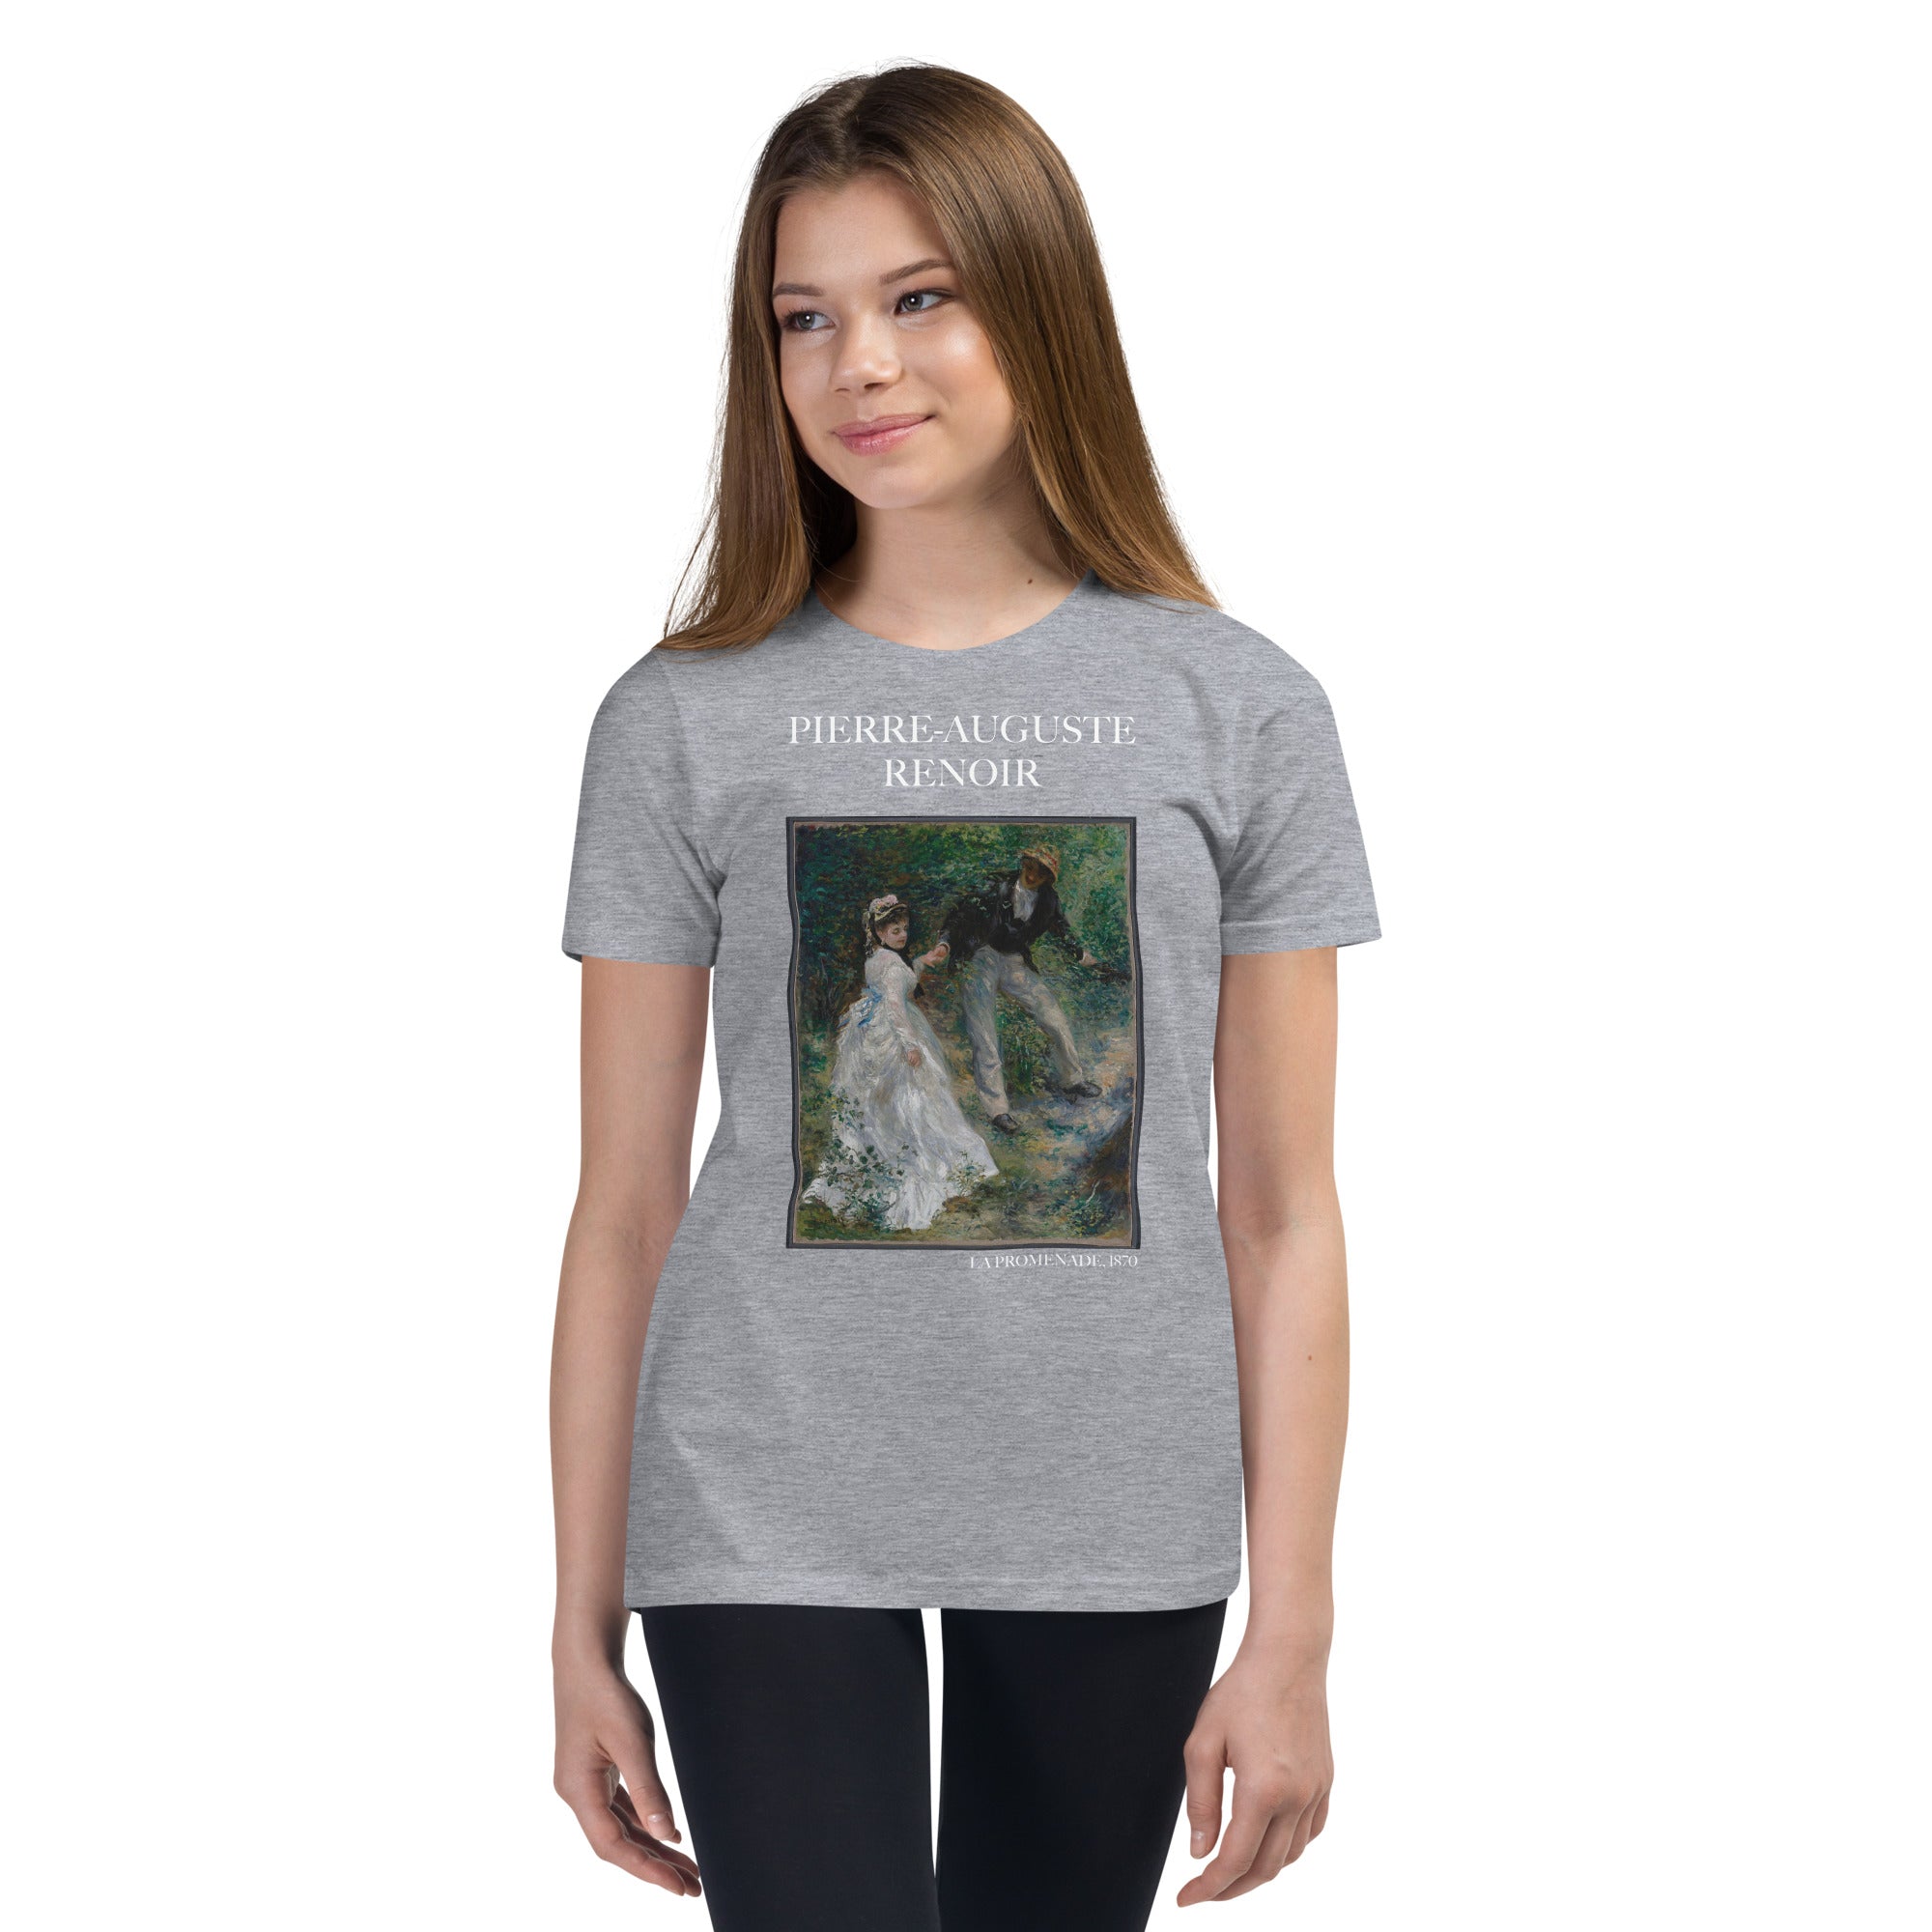 Pierre-Auguste Renoir 'La Promenade' Famous Painting Short Sleeve T-Shirt | Premium Youth Art Tee